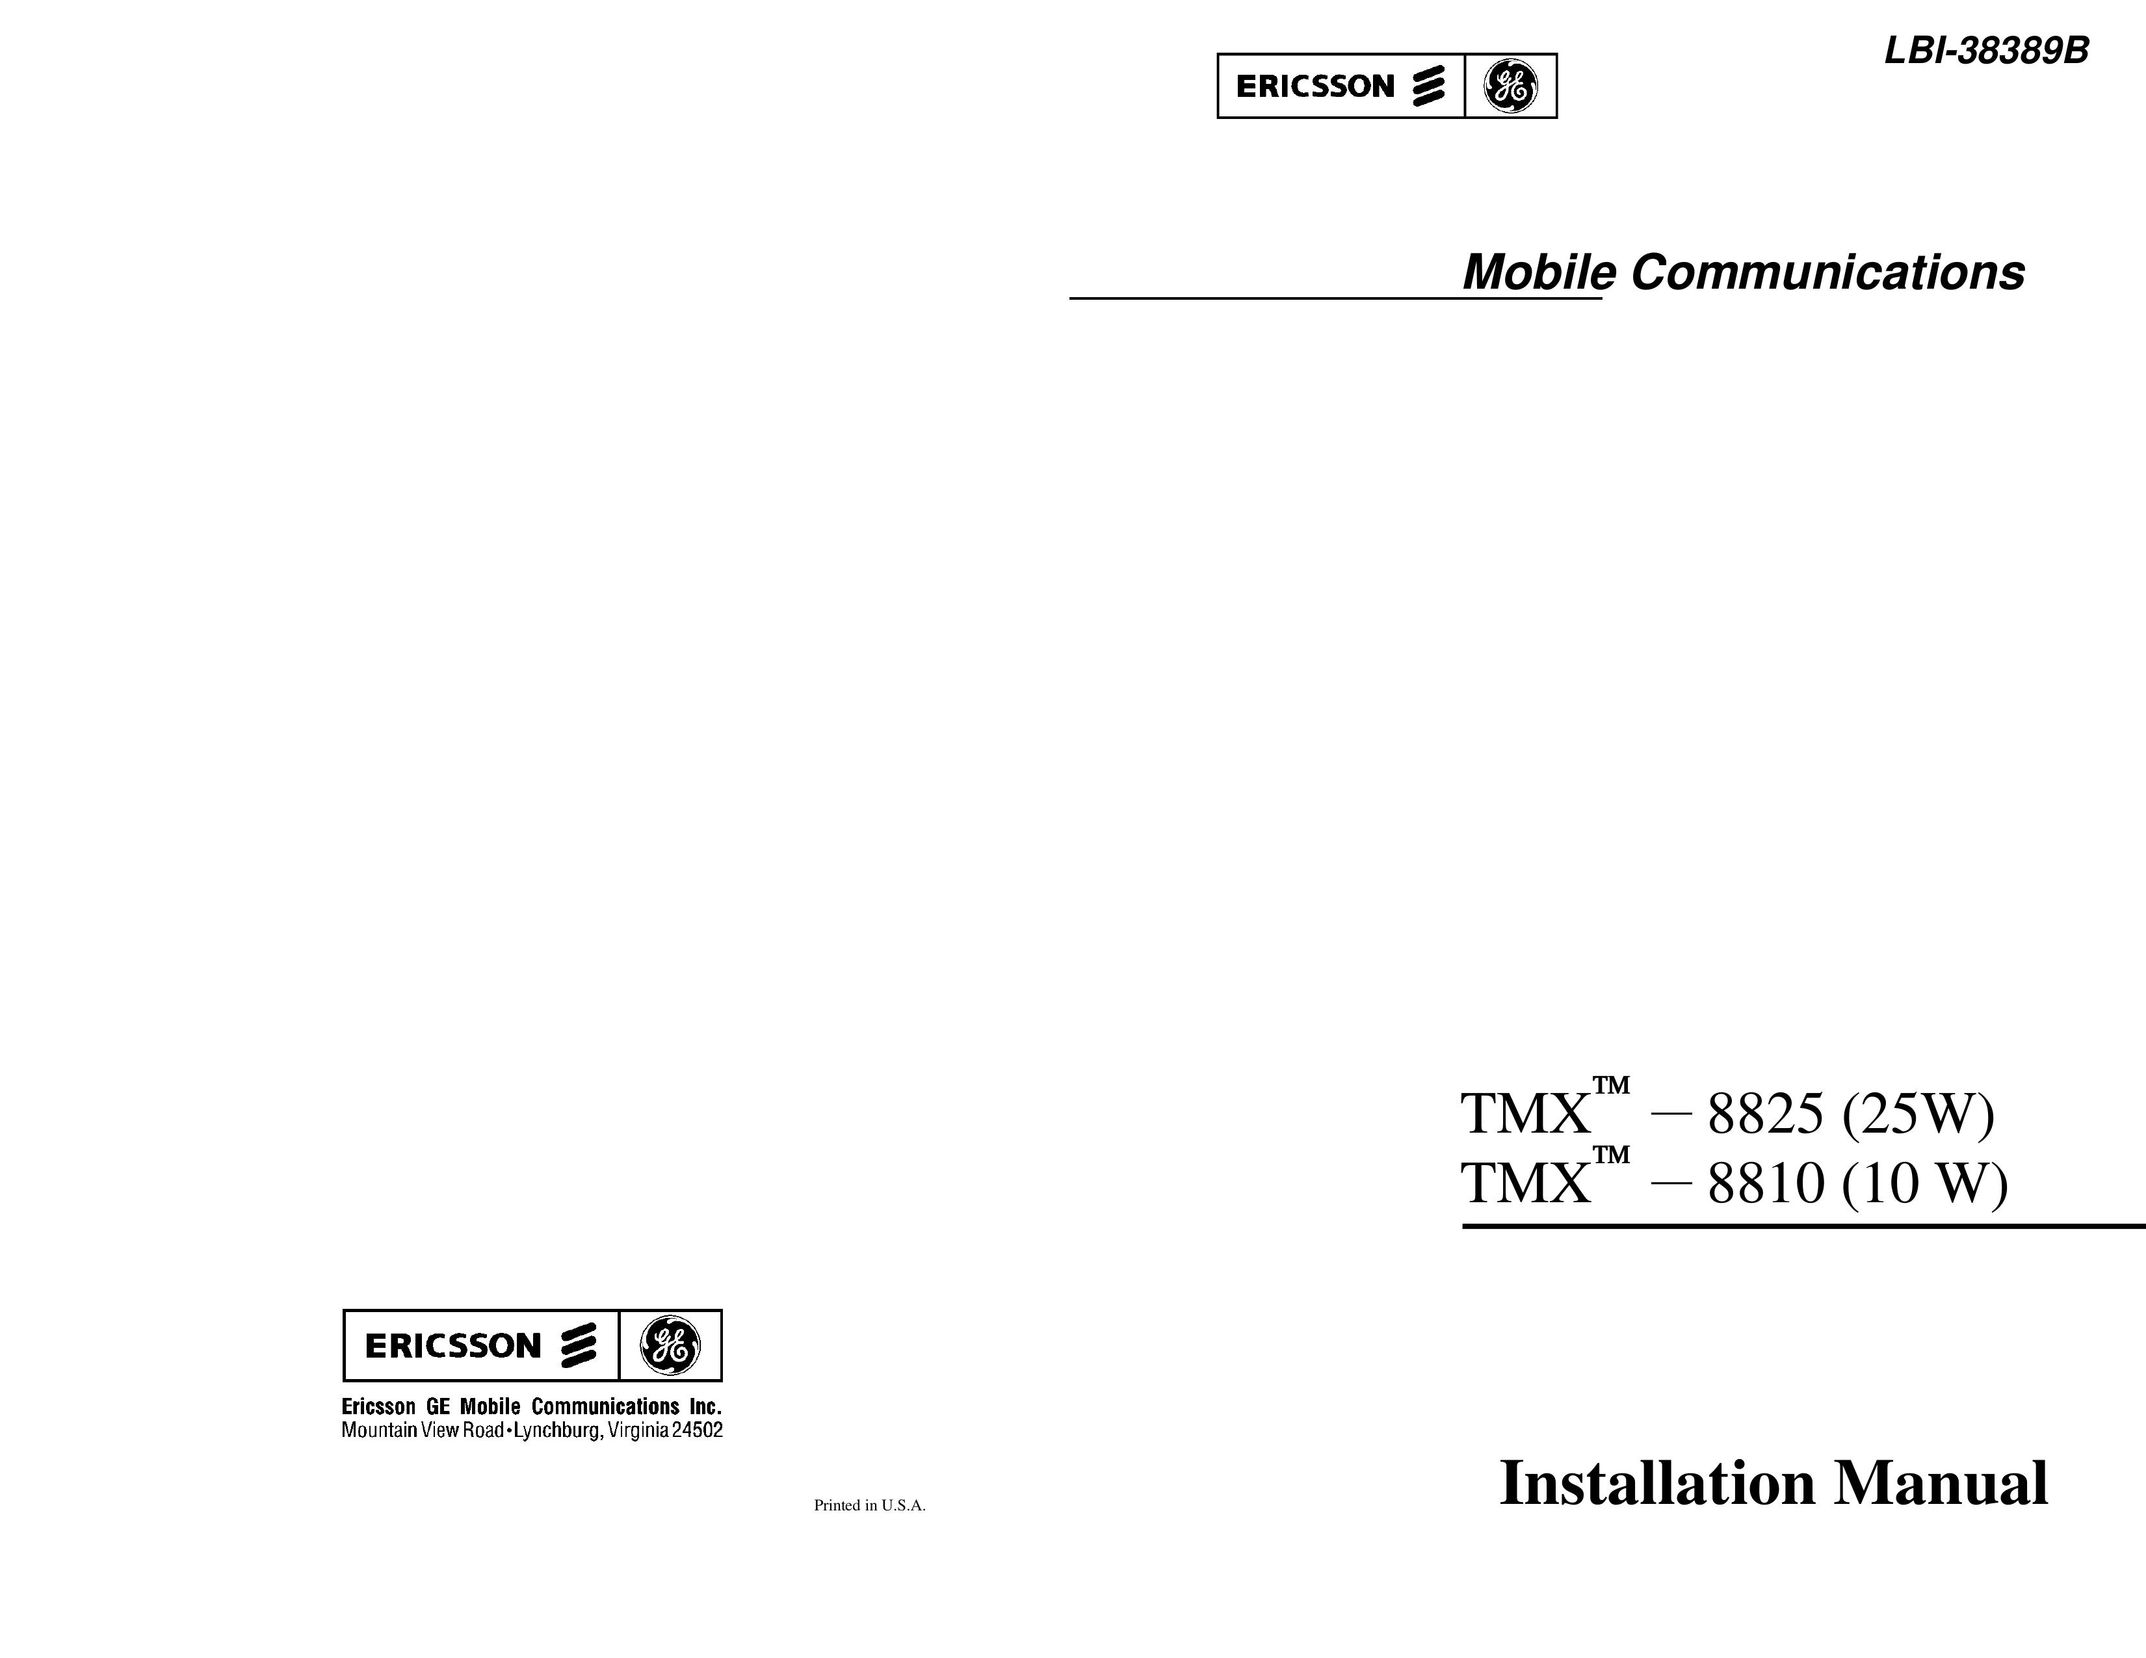 Ericsson TMX-8810 Cell Phone User Manual